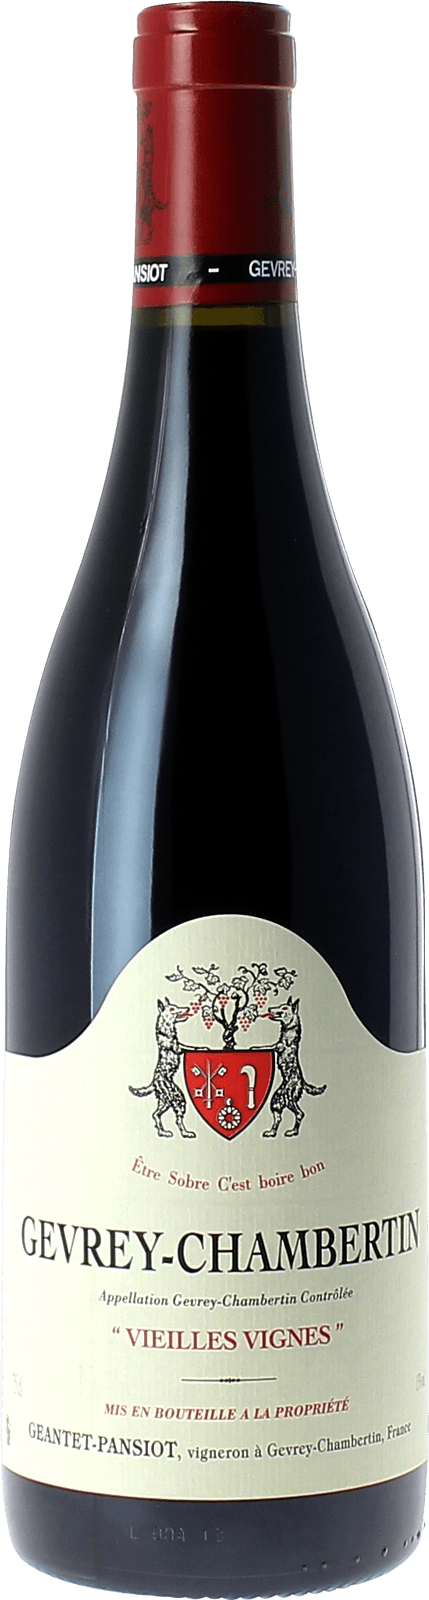 Gevrey chambertin vieilles vignes 2017 Domaine GEANTET PANSIOT, Bourgogne rouge